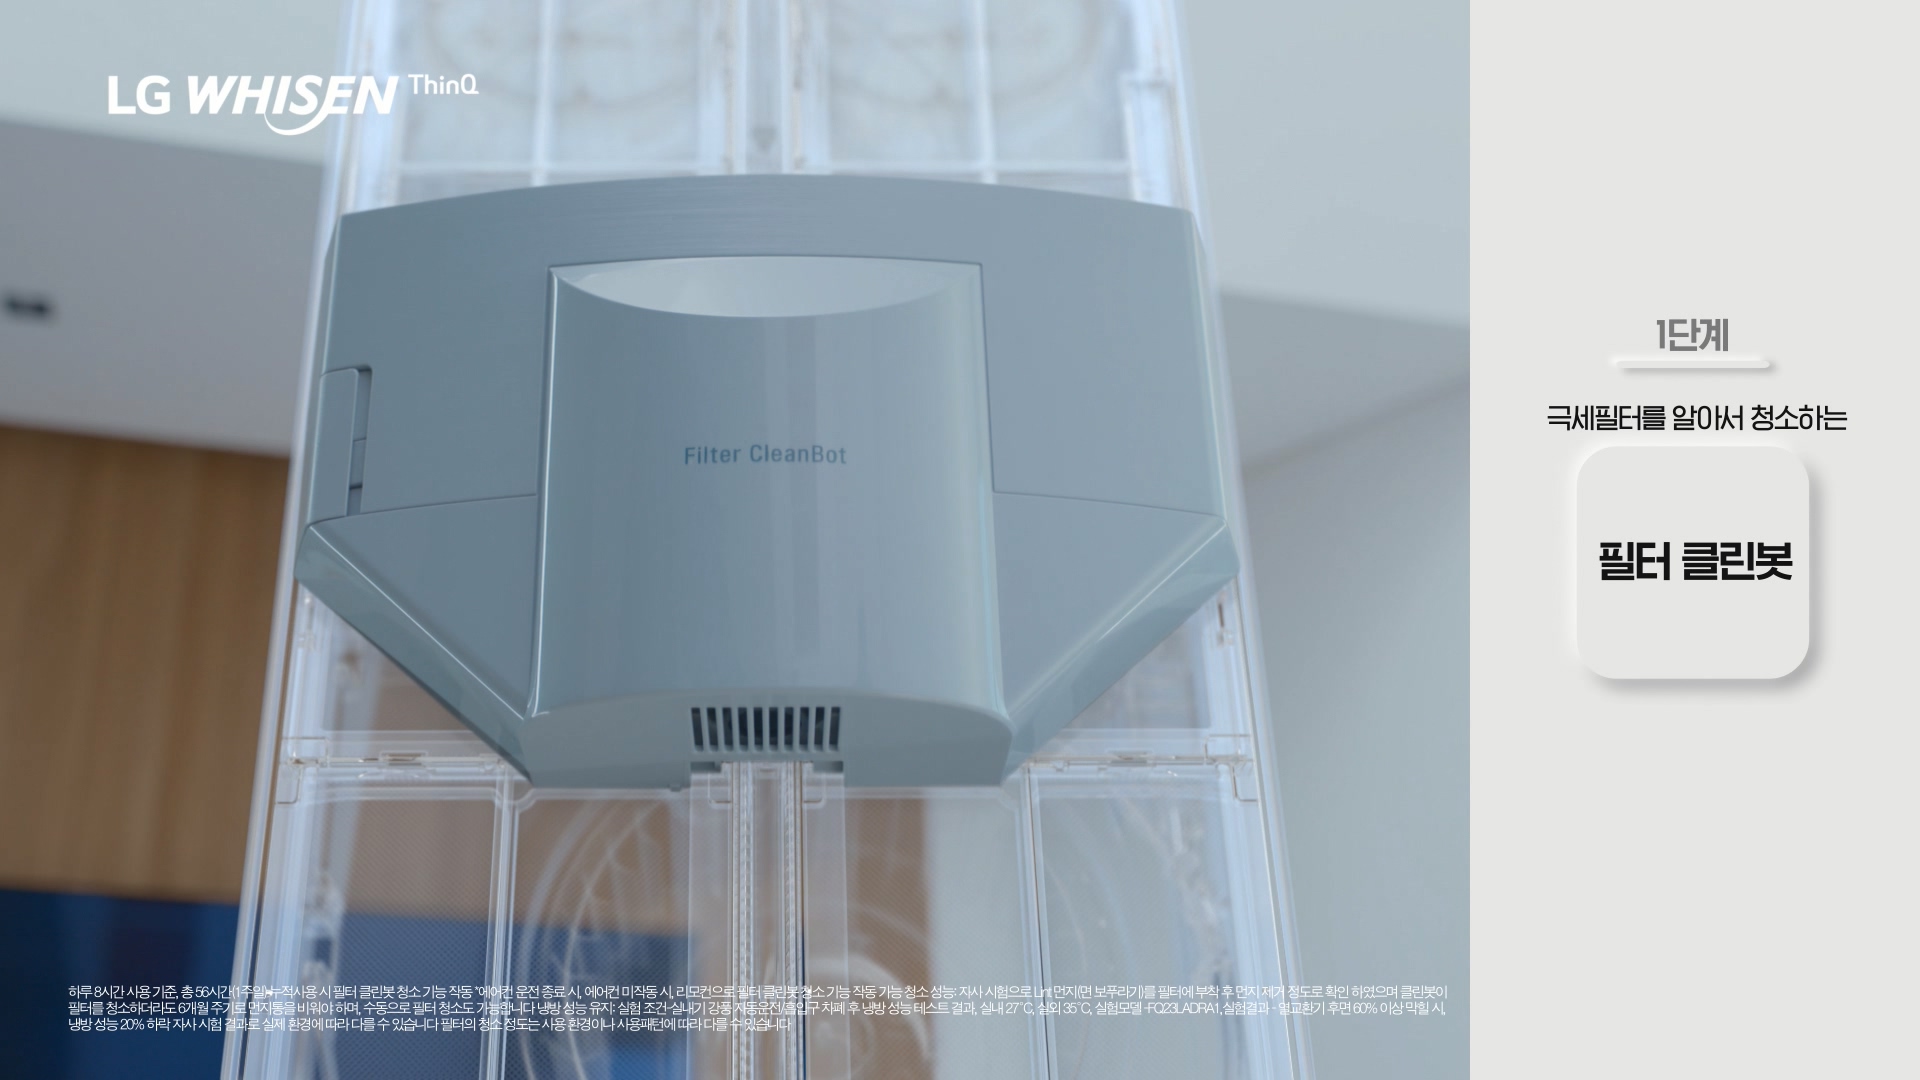 LG 휘센 씽큐 에어컨 광고영상 중 필터 클린봇을 소개하는 장면 캡처화면